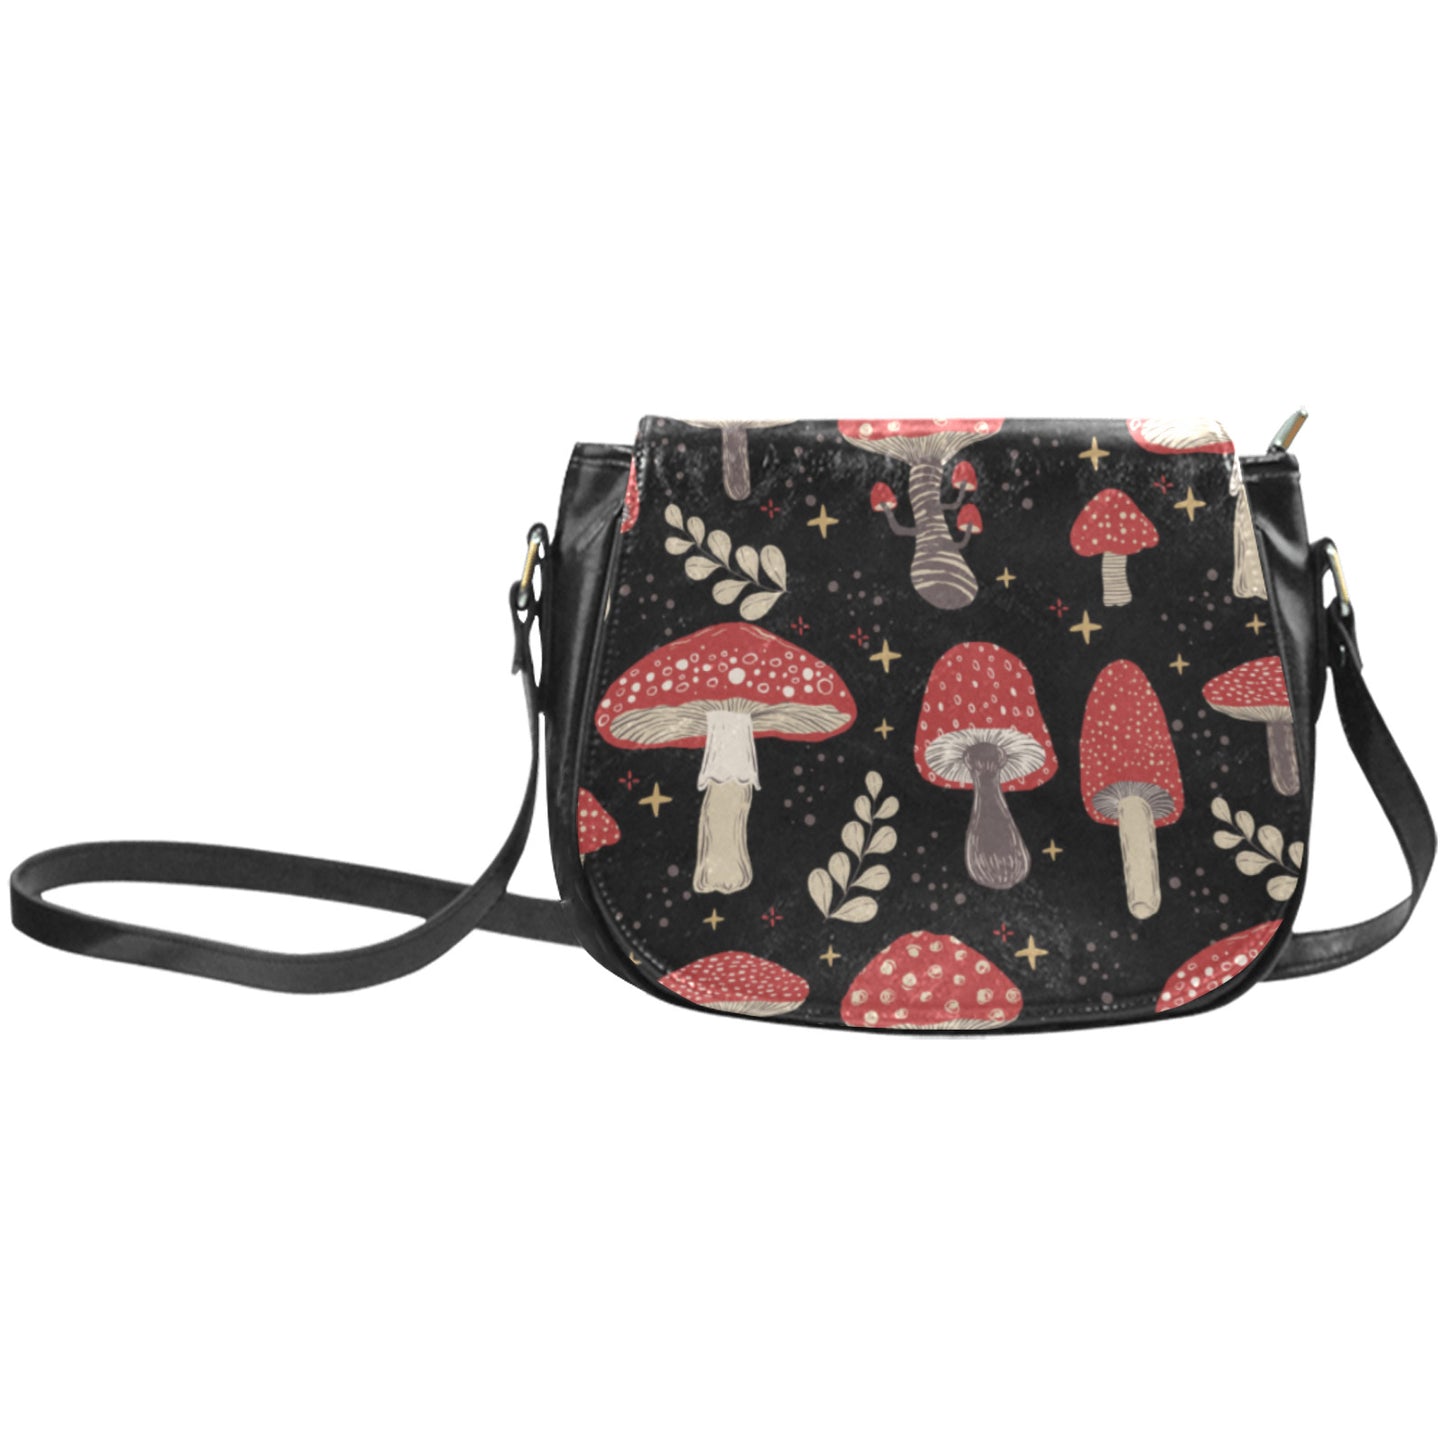 Red Magic mushroom cute saddle bag